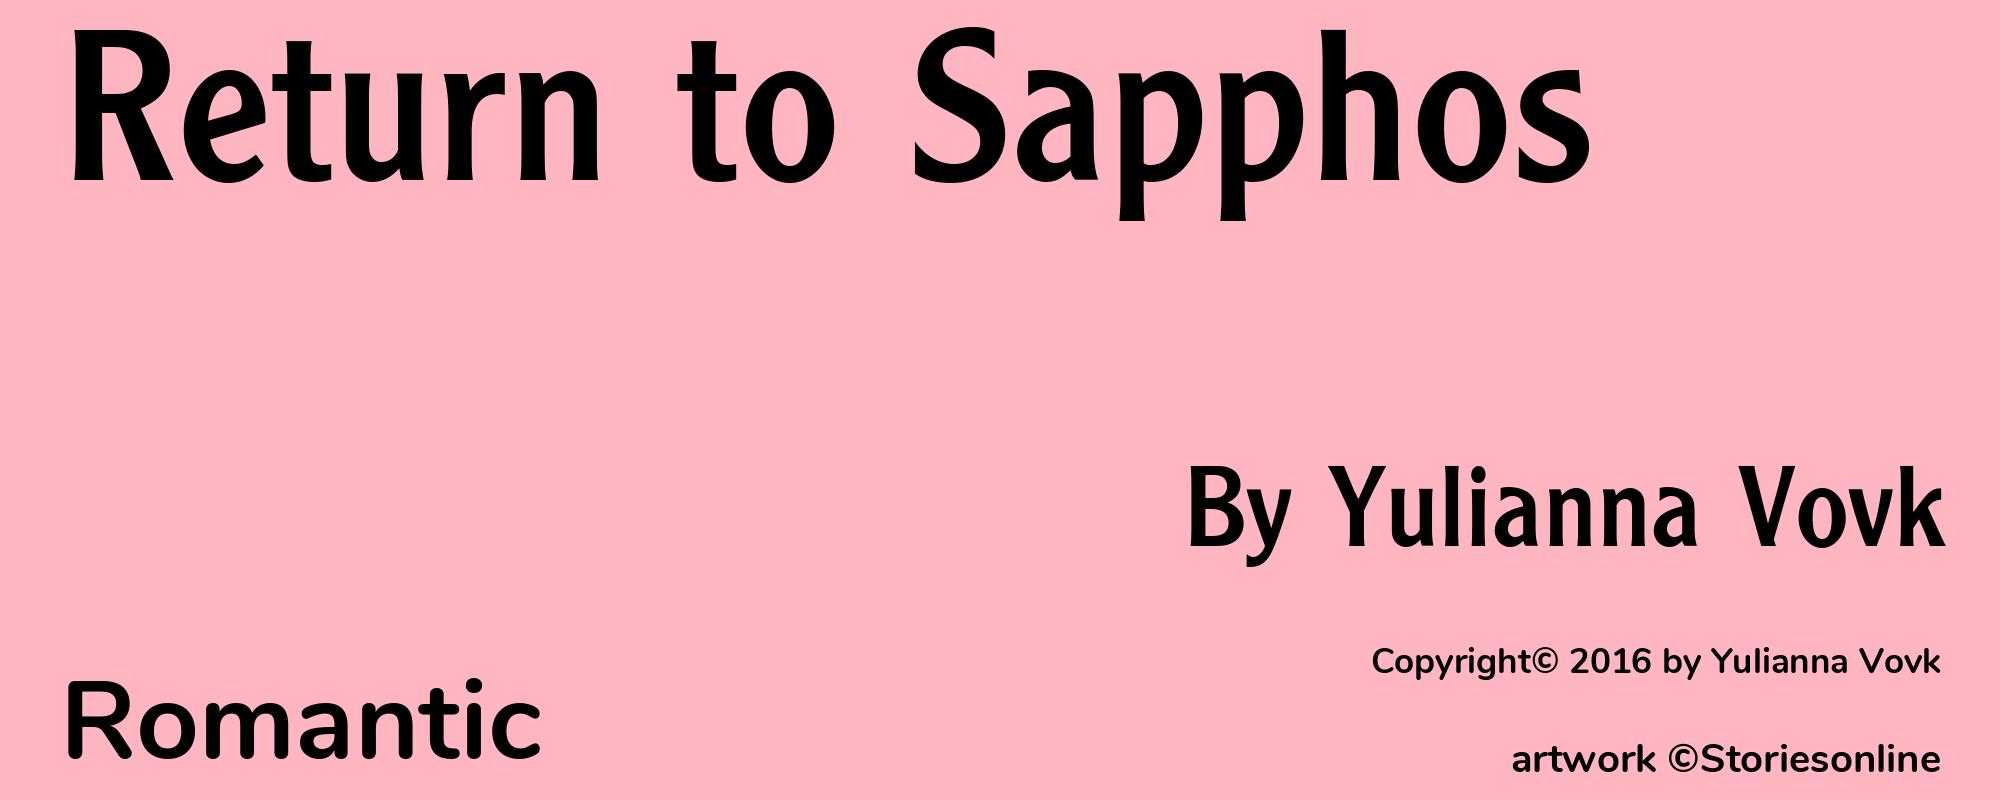 Return to Sapphos - Cover